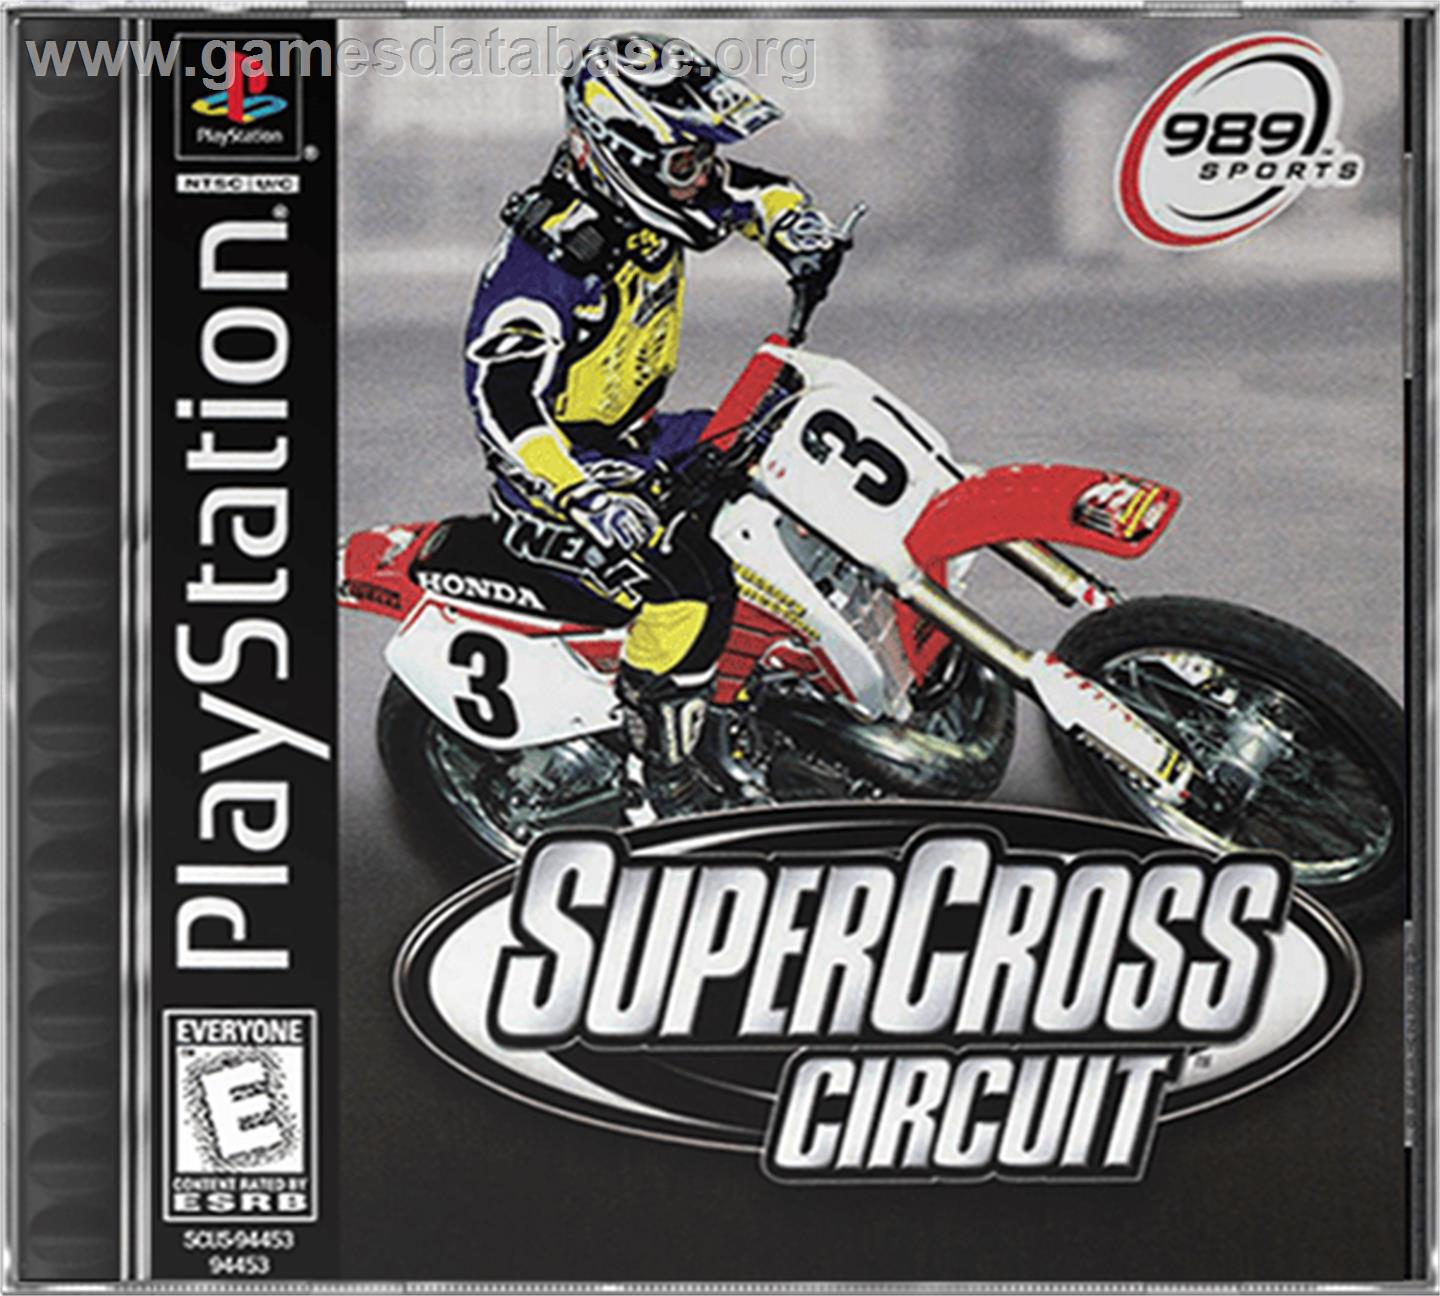 Supercross Circuit - Sony Playstation - Artwork - Box